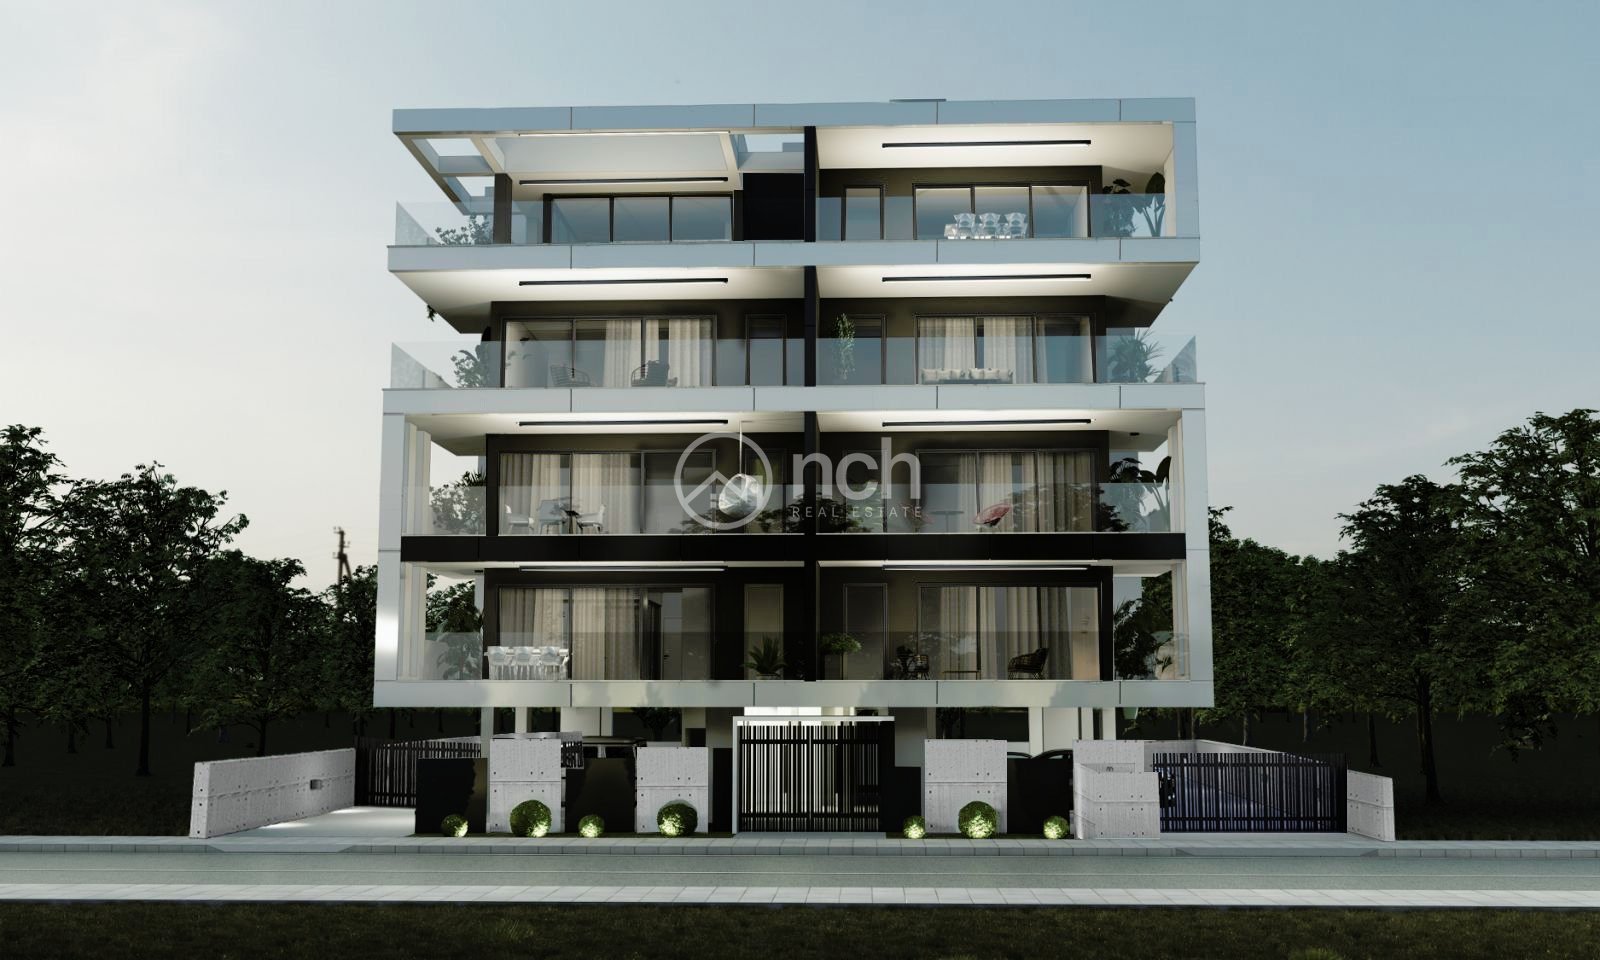 1 Bedroom Apartment for Sale in Nicosia